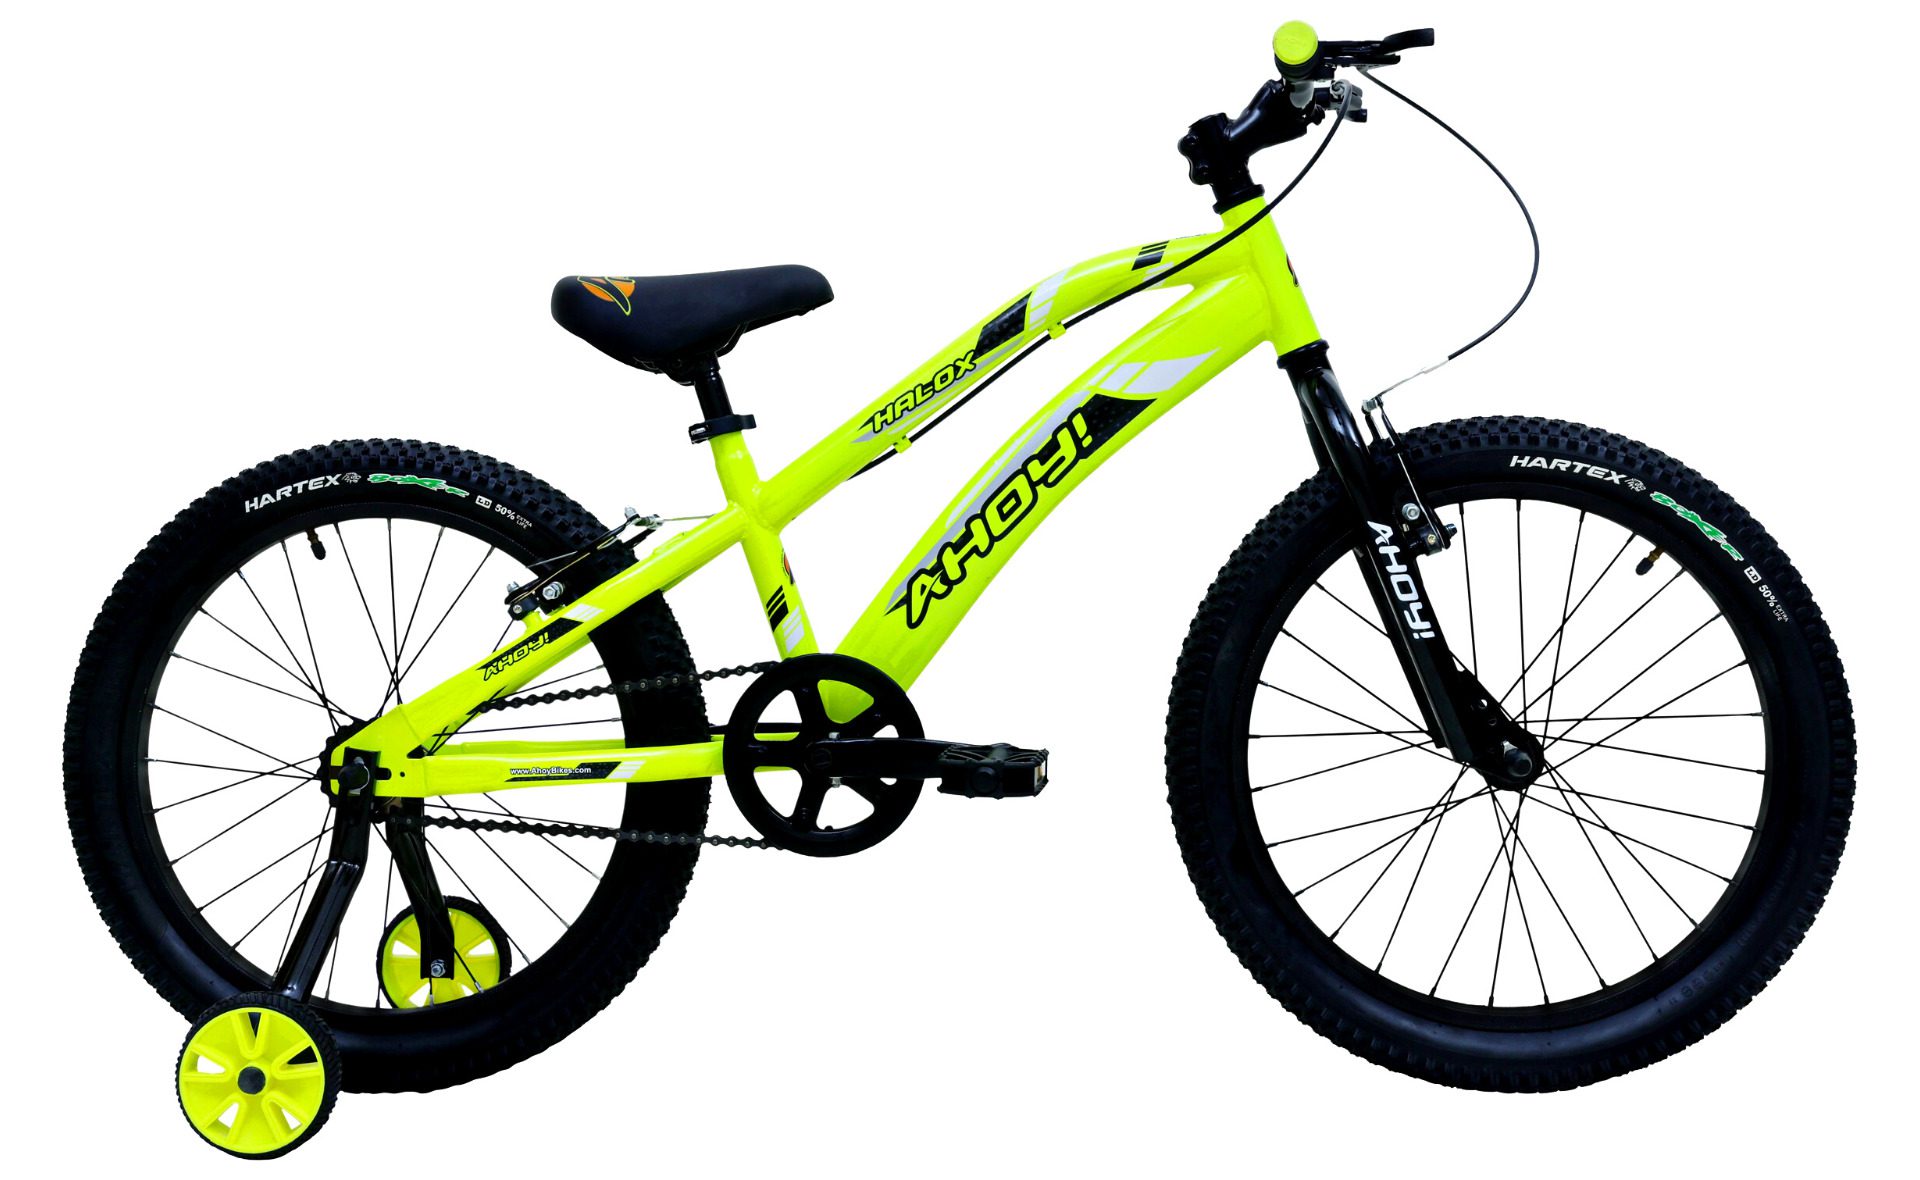 Halox Kids Bike Single Speed 20T | Buy Yellow Cycle Non Gear for Kids